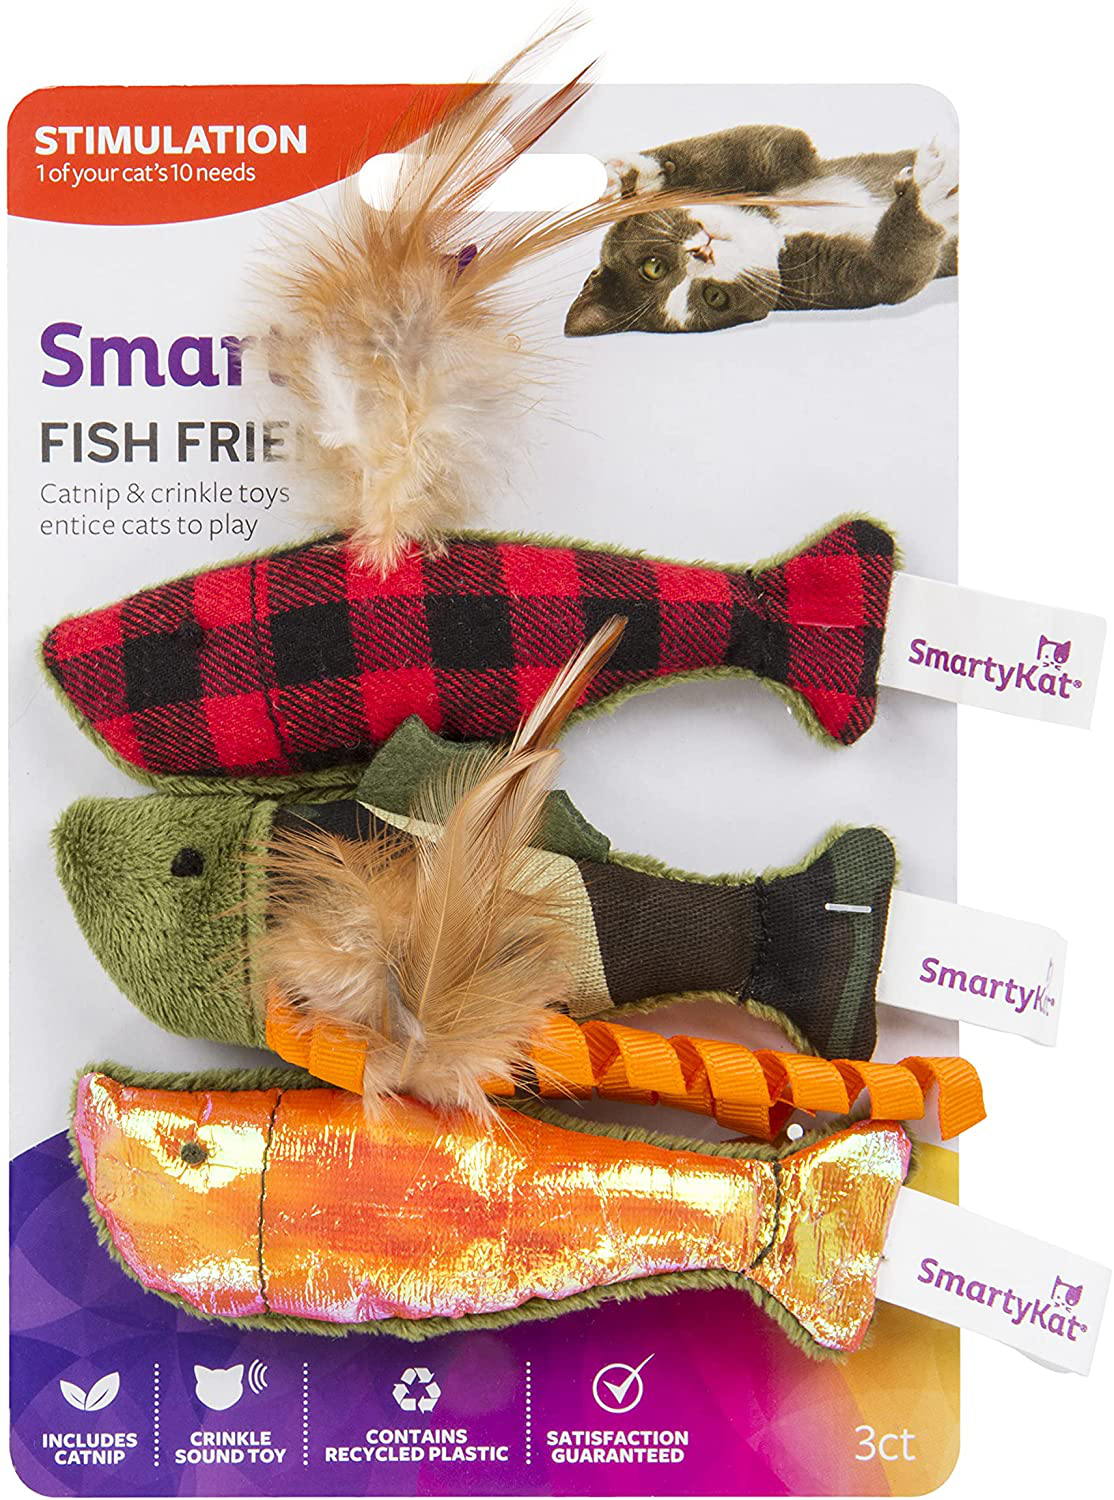 Smartykat Fish Friends Crinkle and Catnip Cat Toys Animals & Pet Supplies > Pet Supplies > Cat Supplies > Cat Toys SmartyKat   